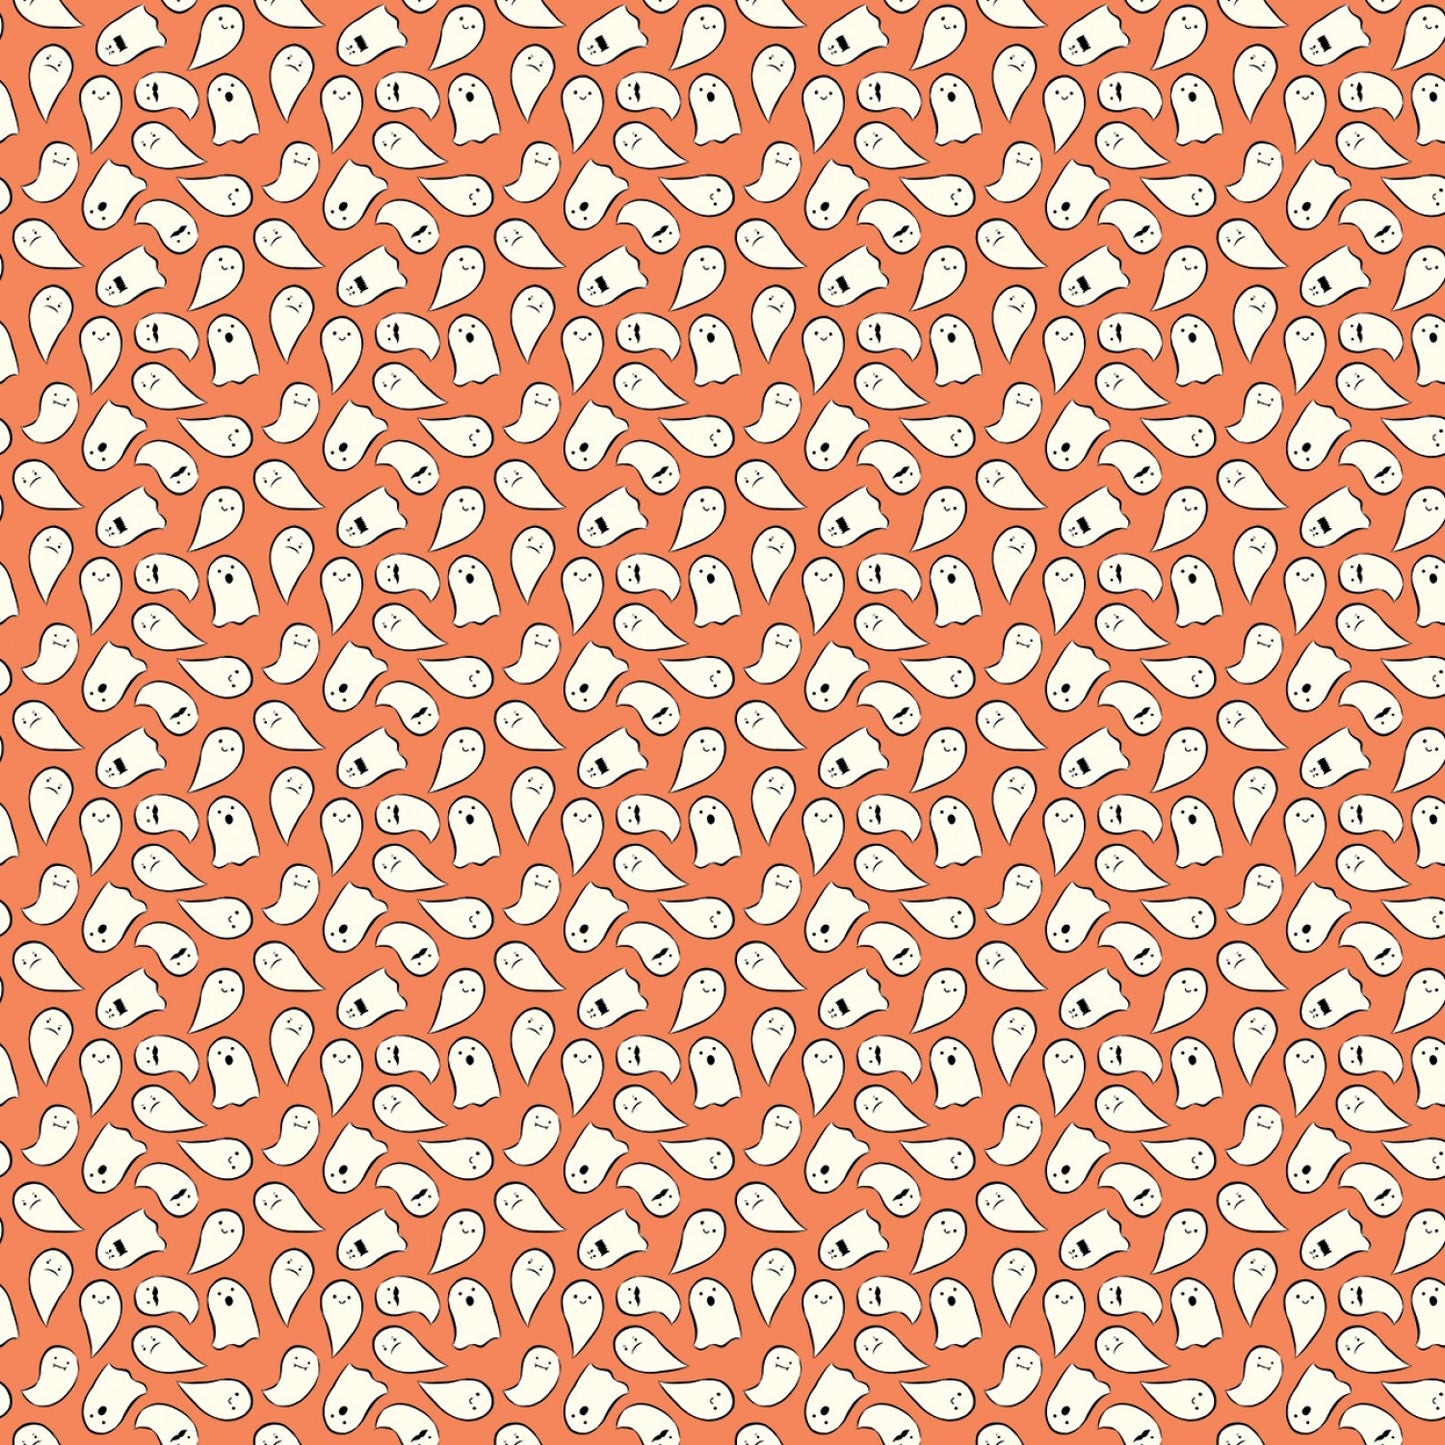 Spooky Schoolhouse Ghosts || Orange || Cotton Quilting Fabric || Half Yard